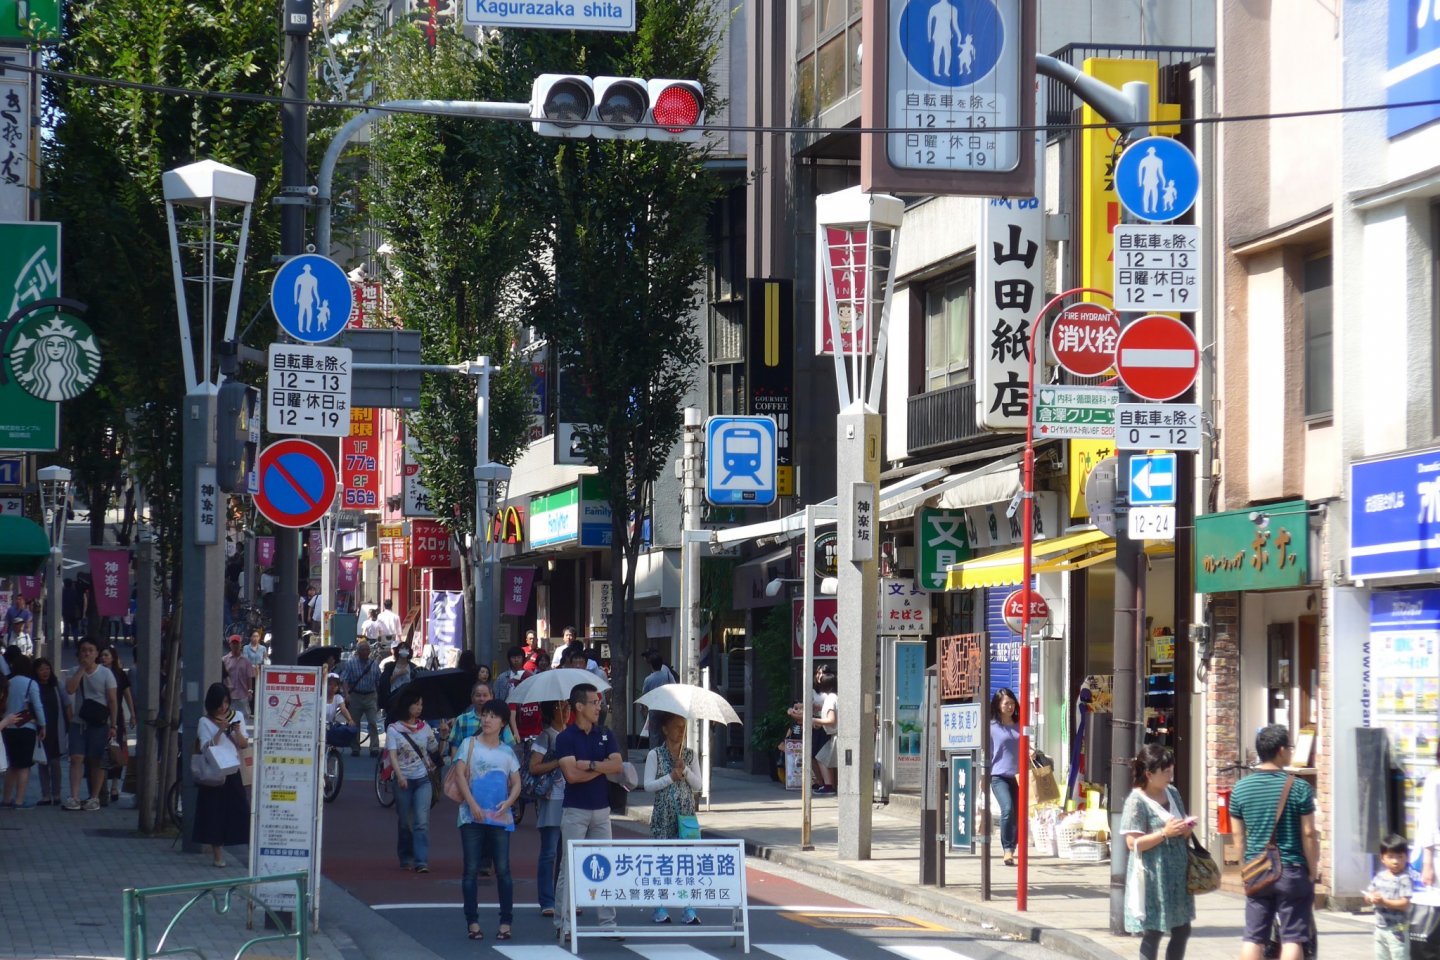 The start of Kagurazaka street is a short walk from Iidabashi Station.